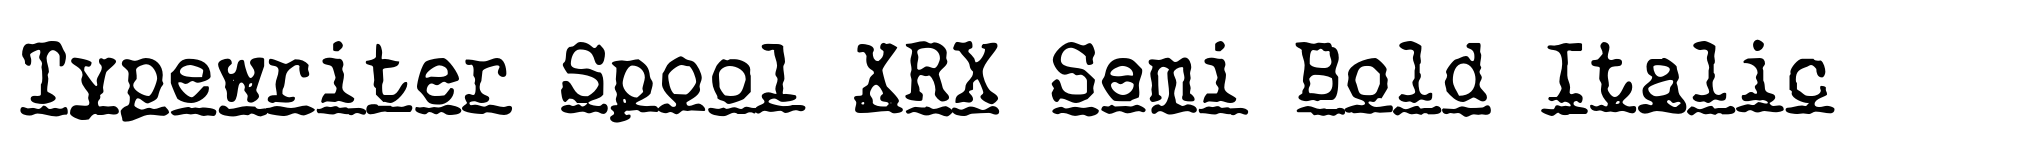 Typewriter Spool XRX Semi Bold Italic image